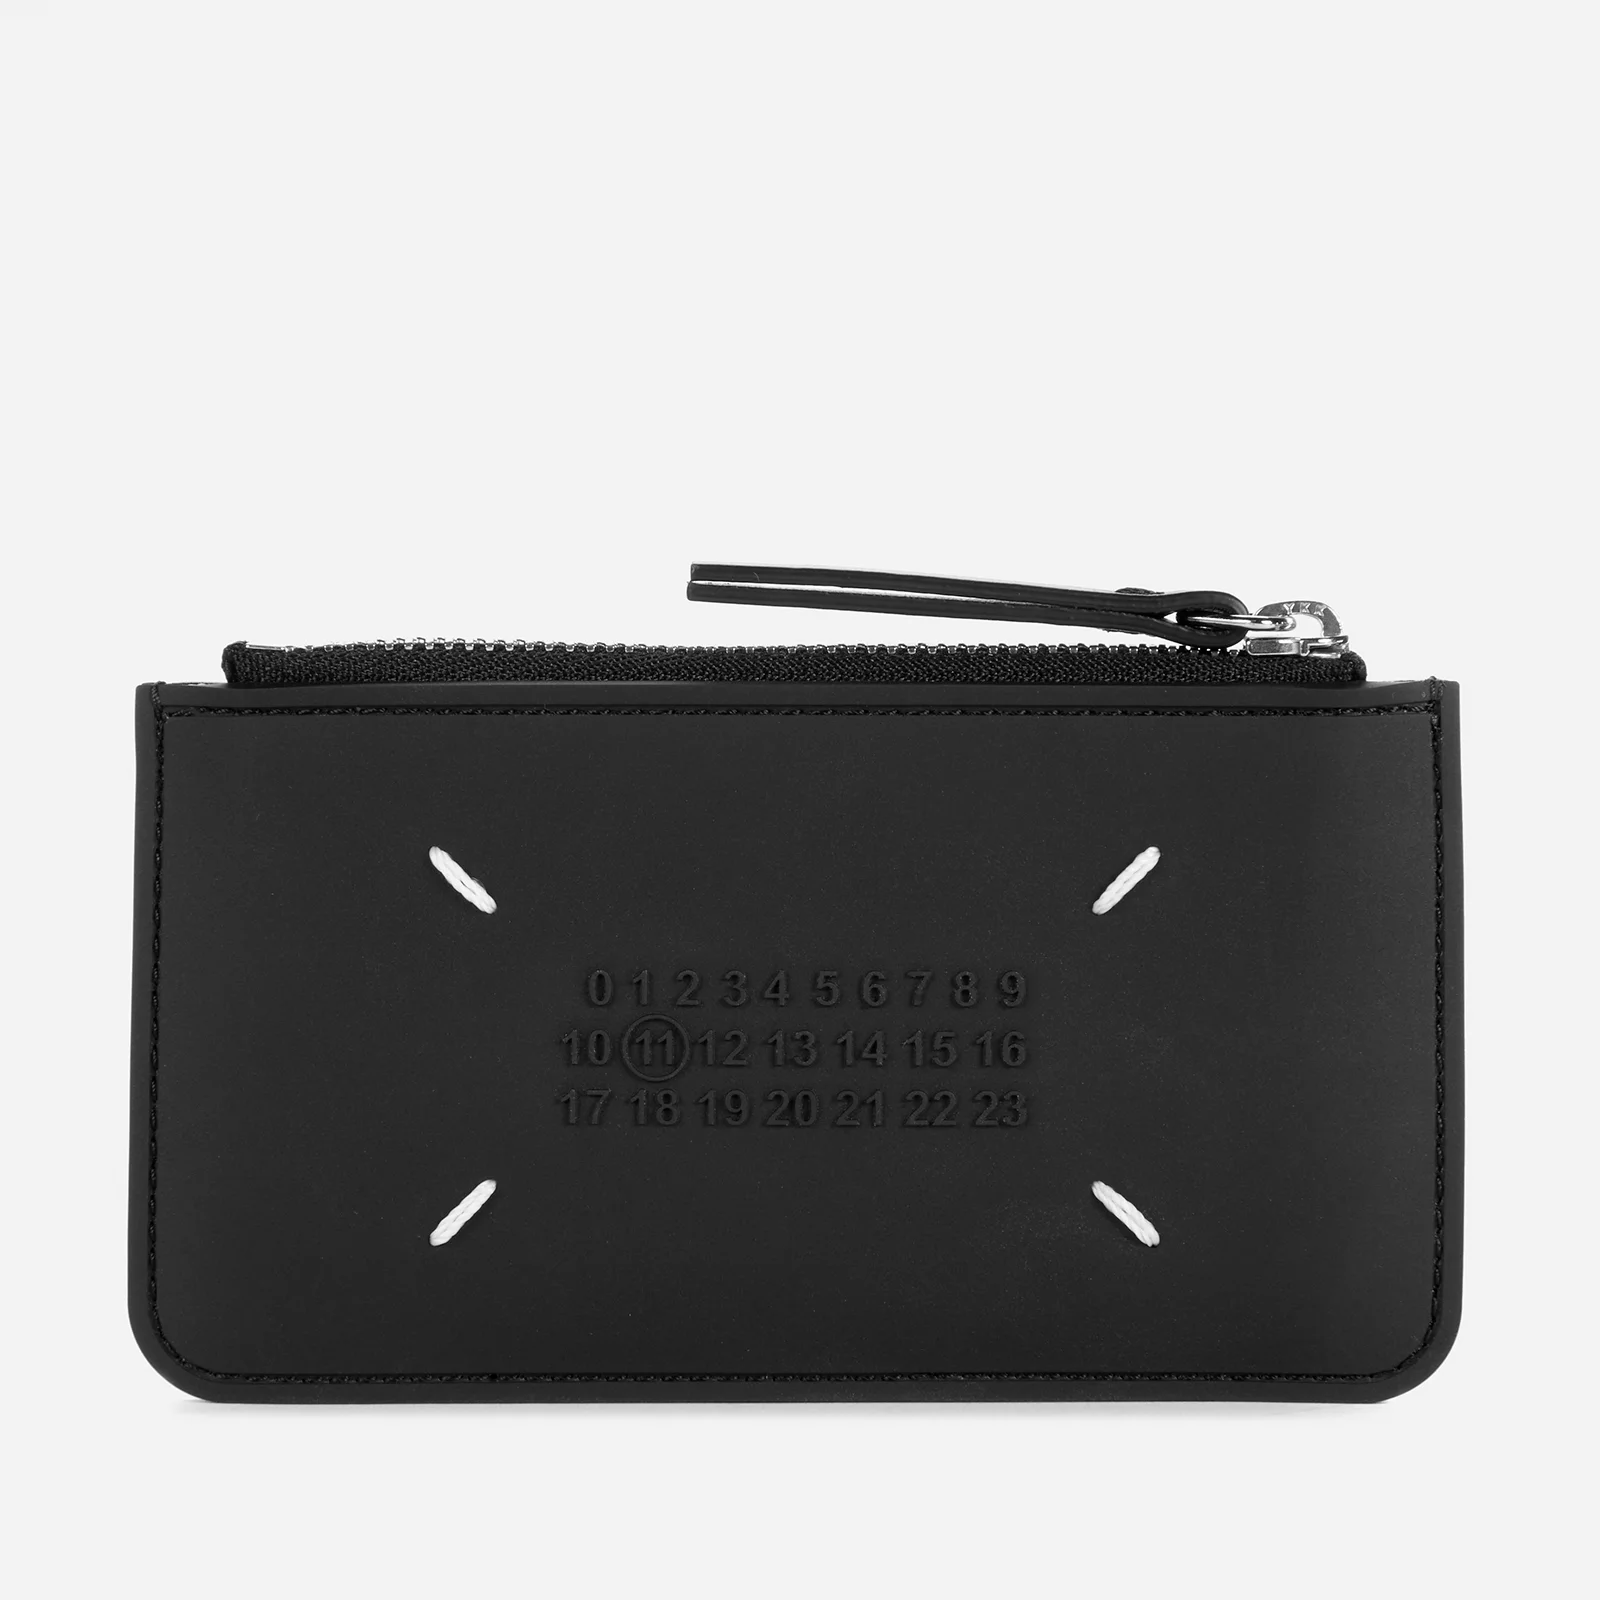 Maison Margiela Men's Zip Wallet - Black Image 1